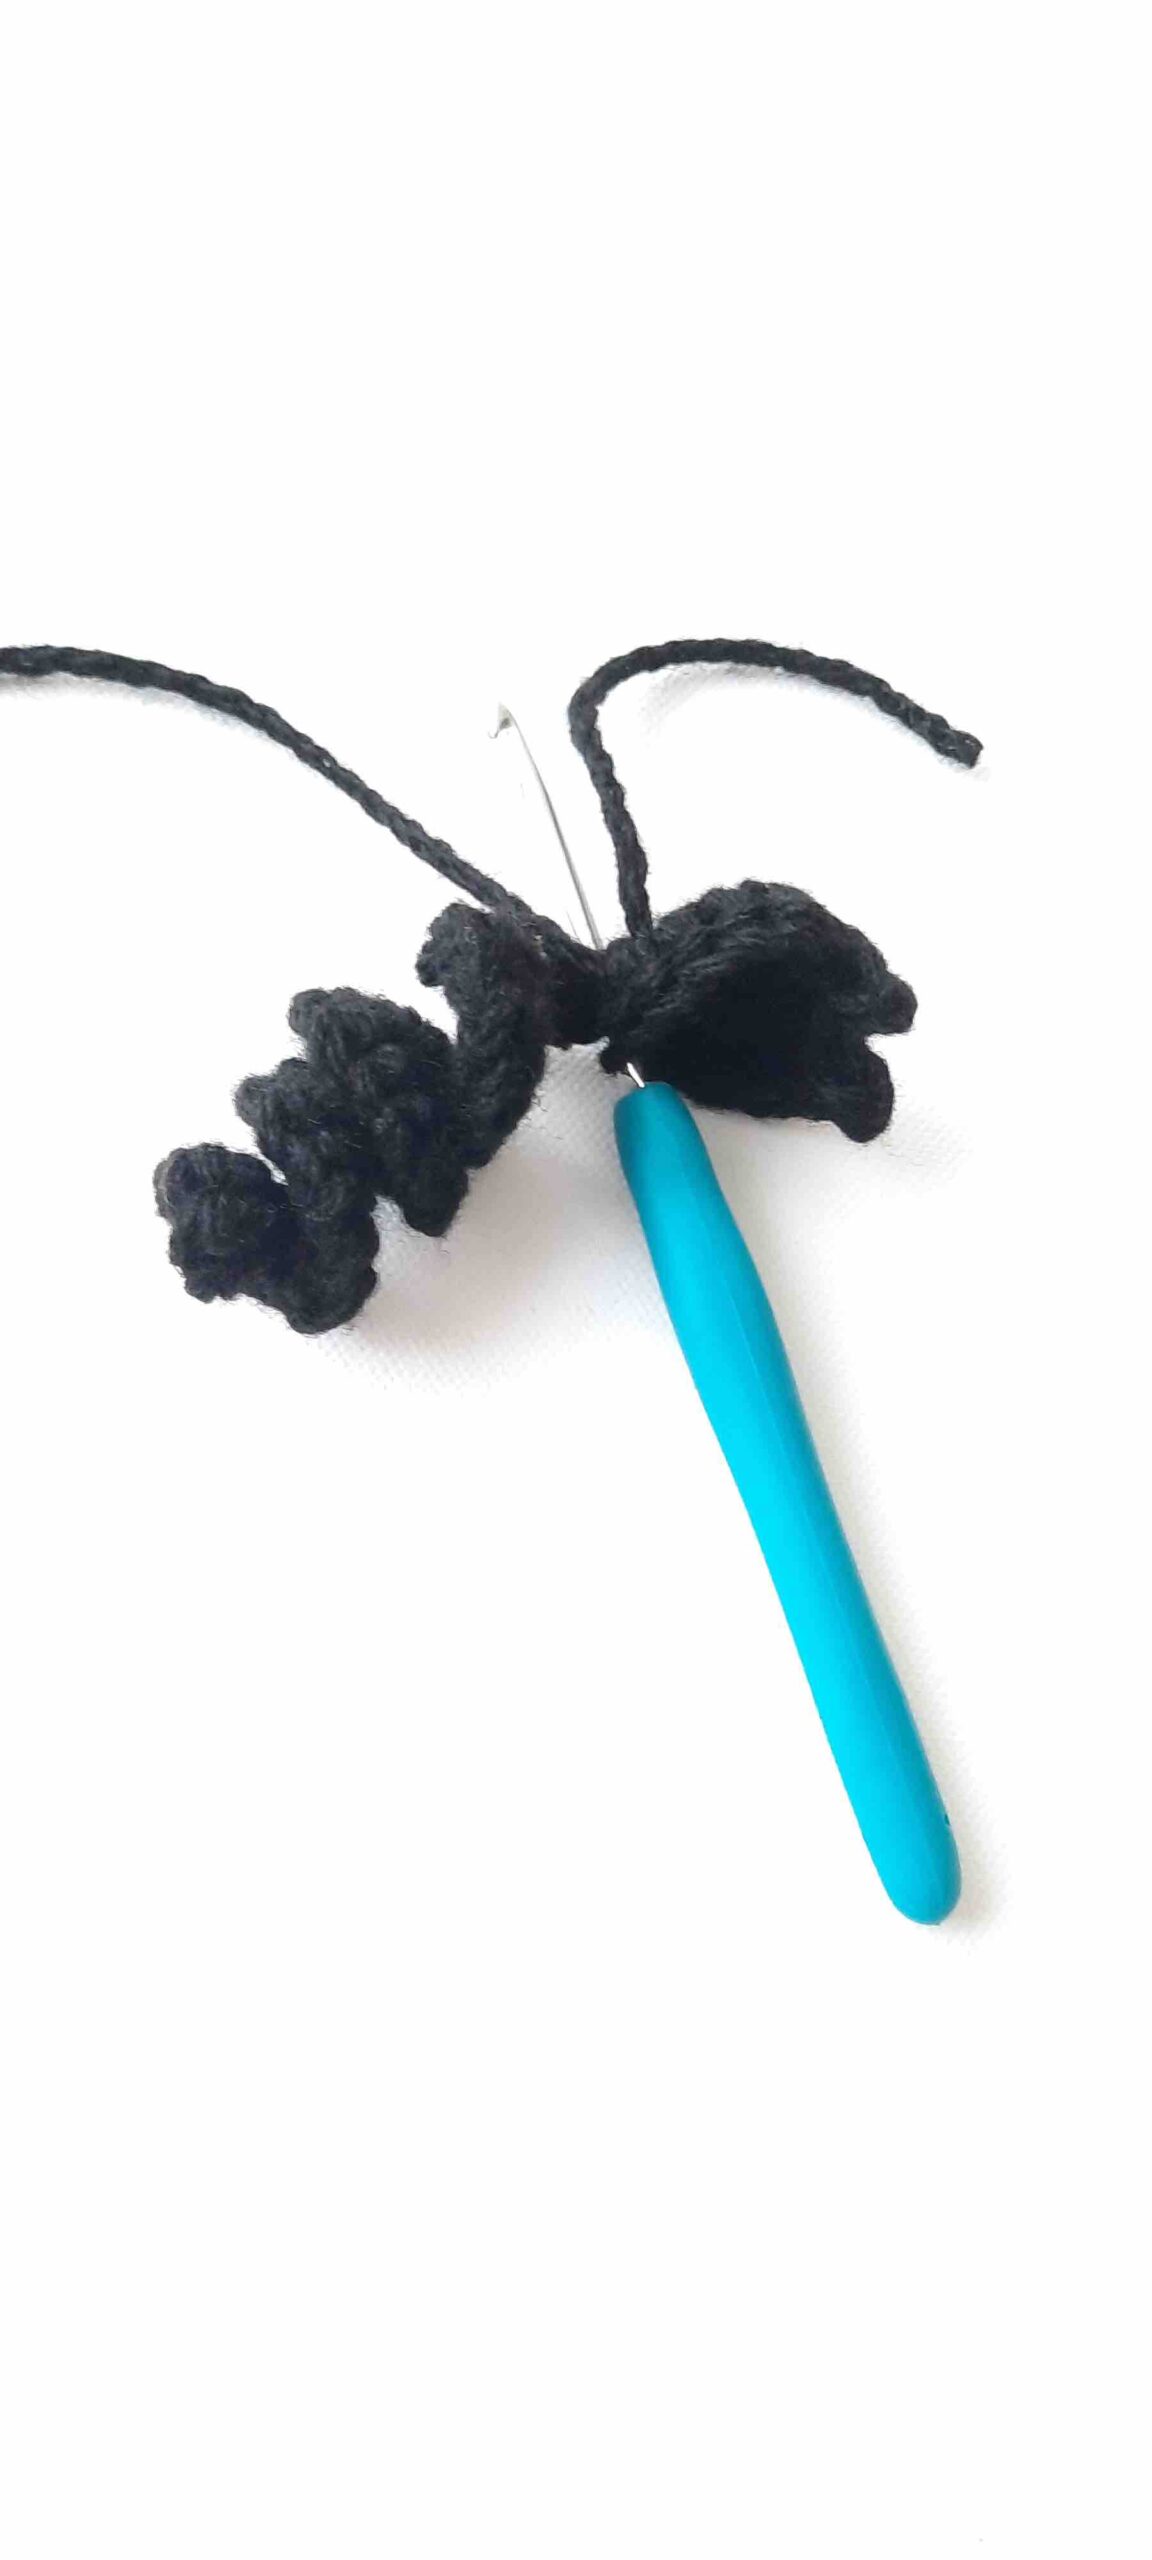 crochet patterns black cat